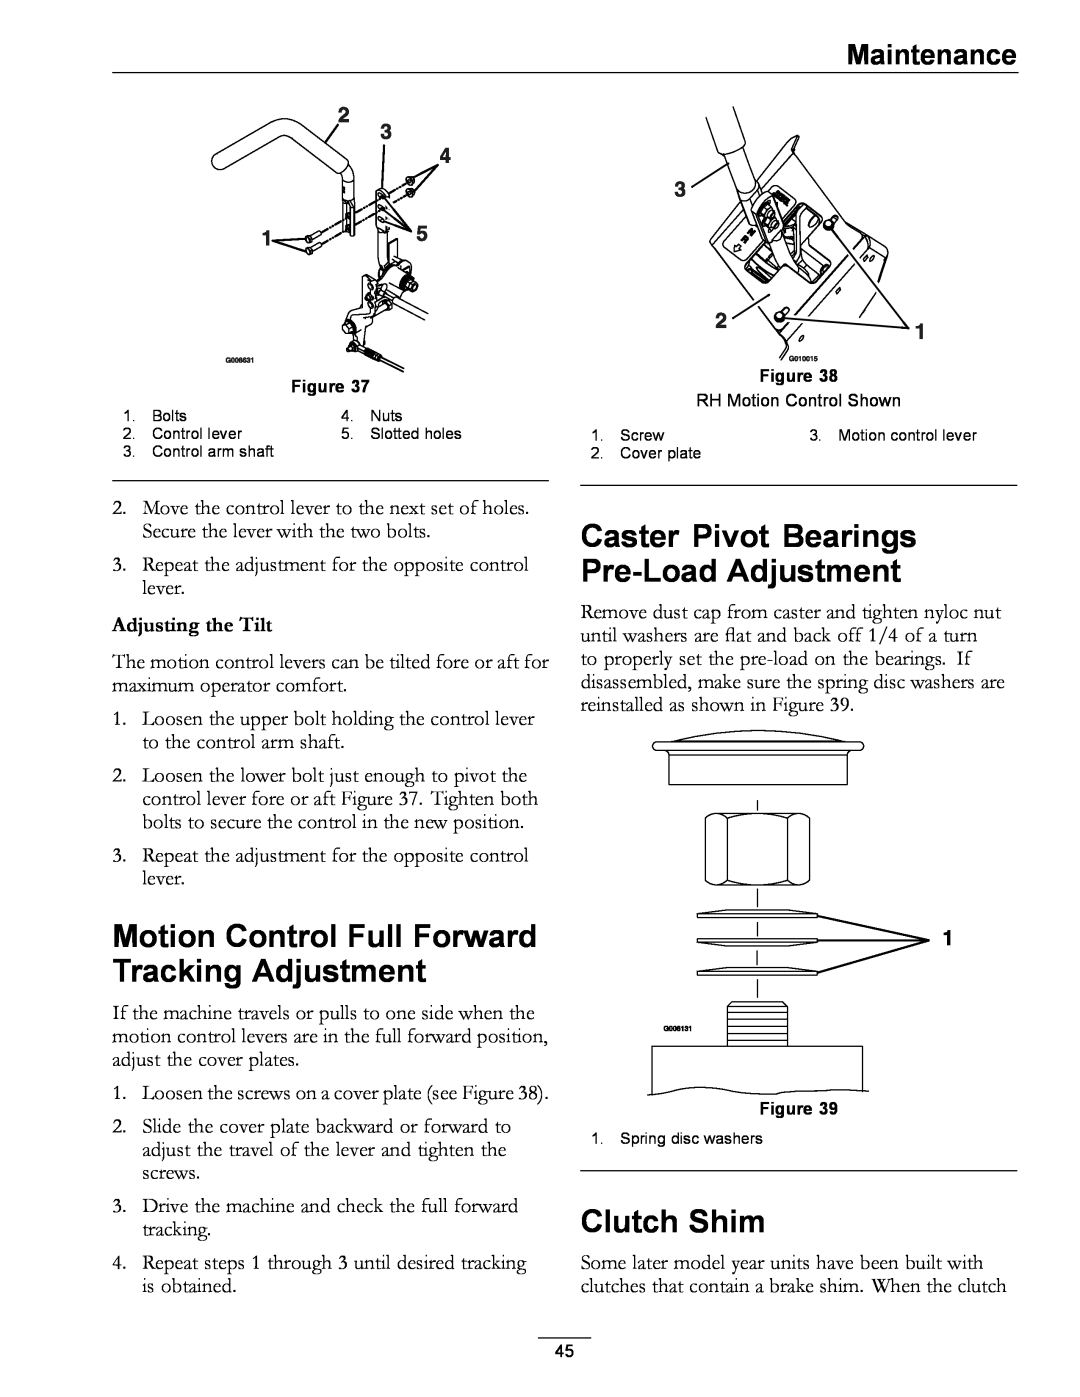 Exmark 000 & higher Caster Pivot Bearings Pre-LoadAdjustment, Clutch Shim, Motion Control Full Forward Tracking Adjustment 